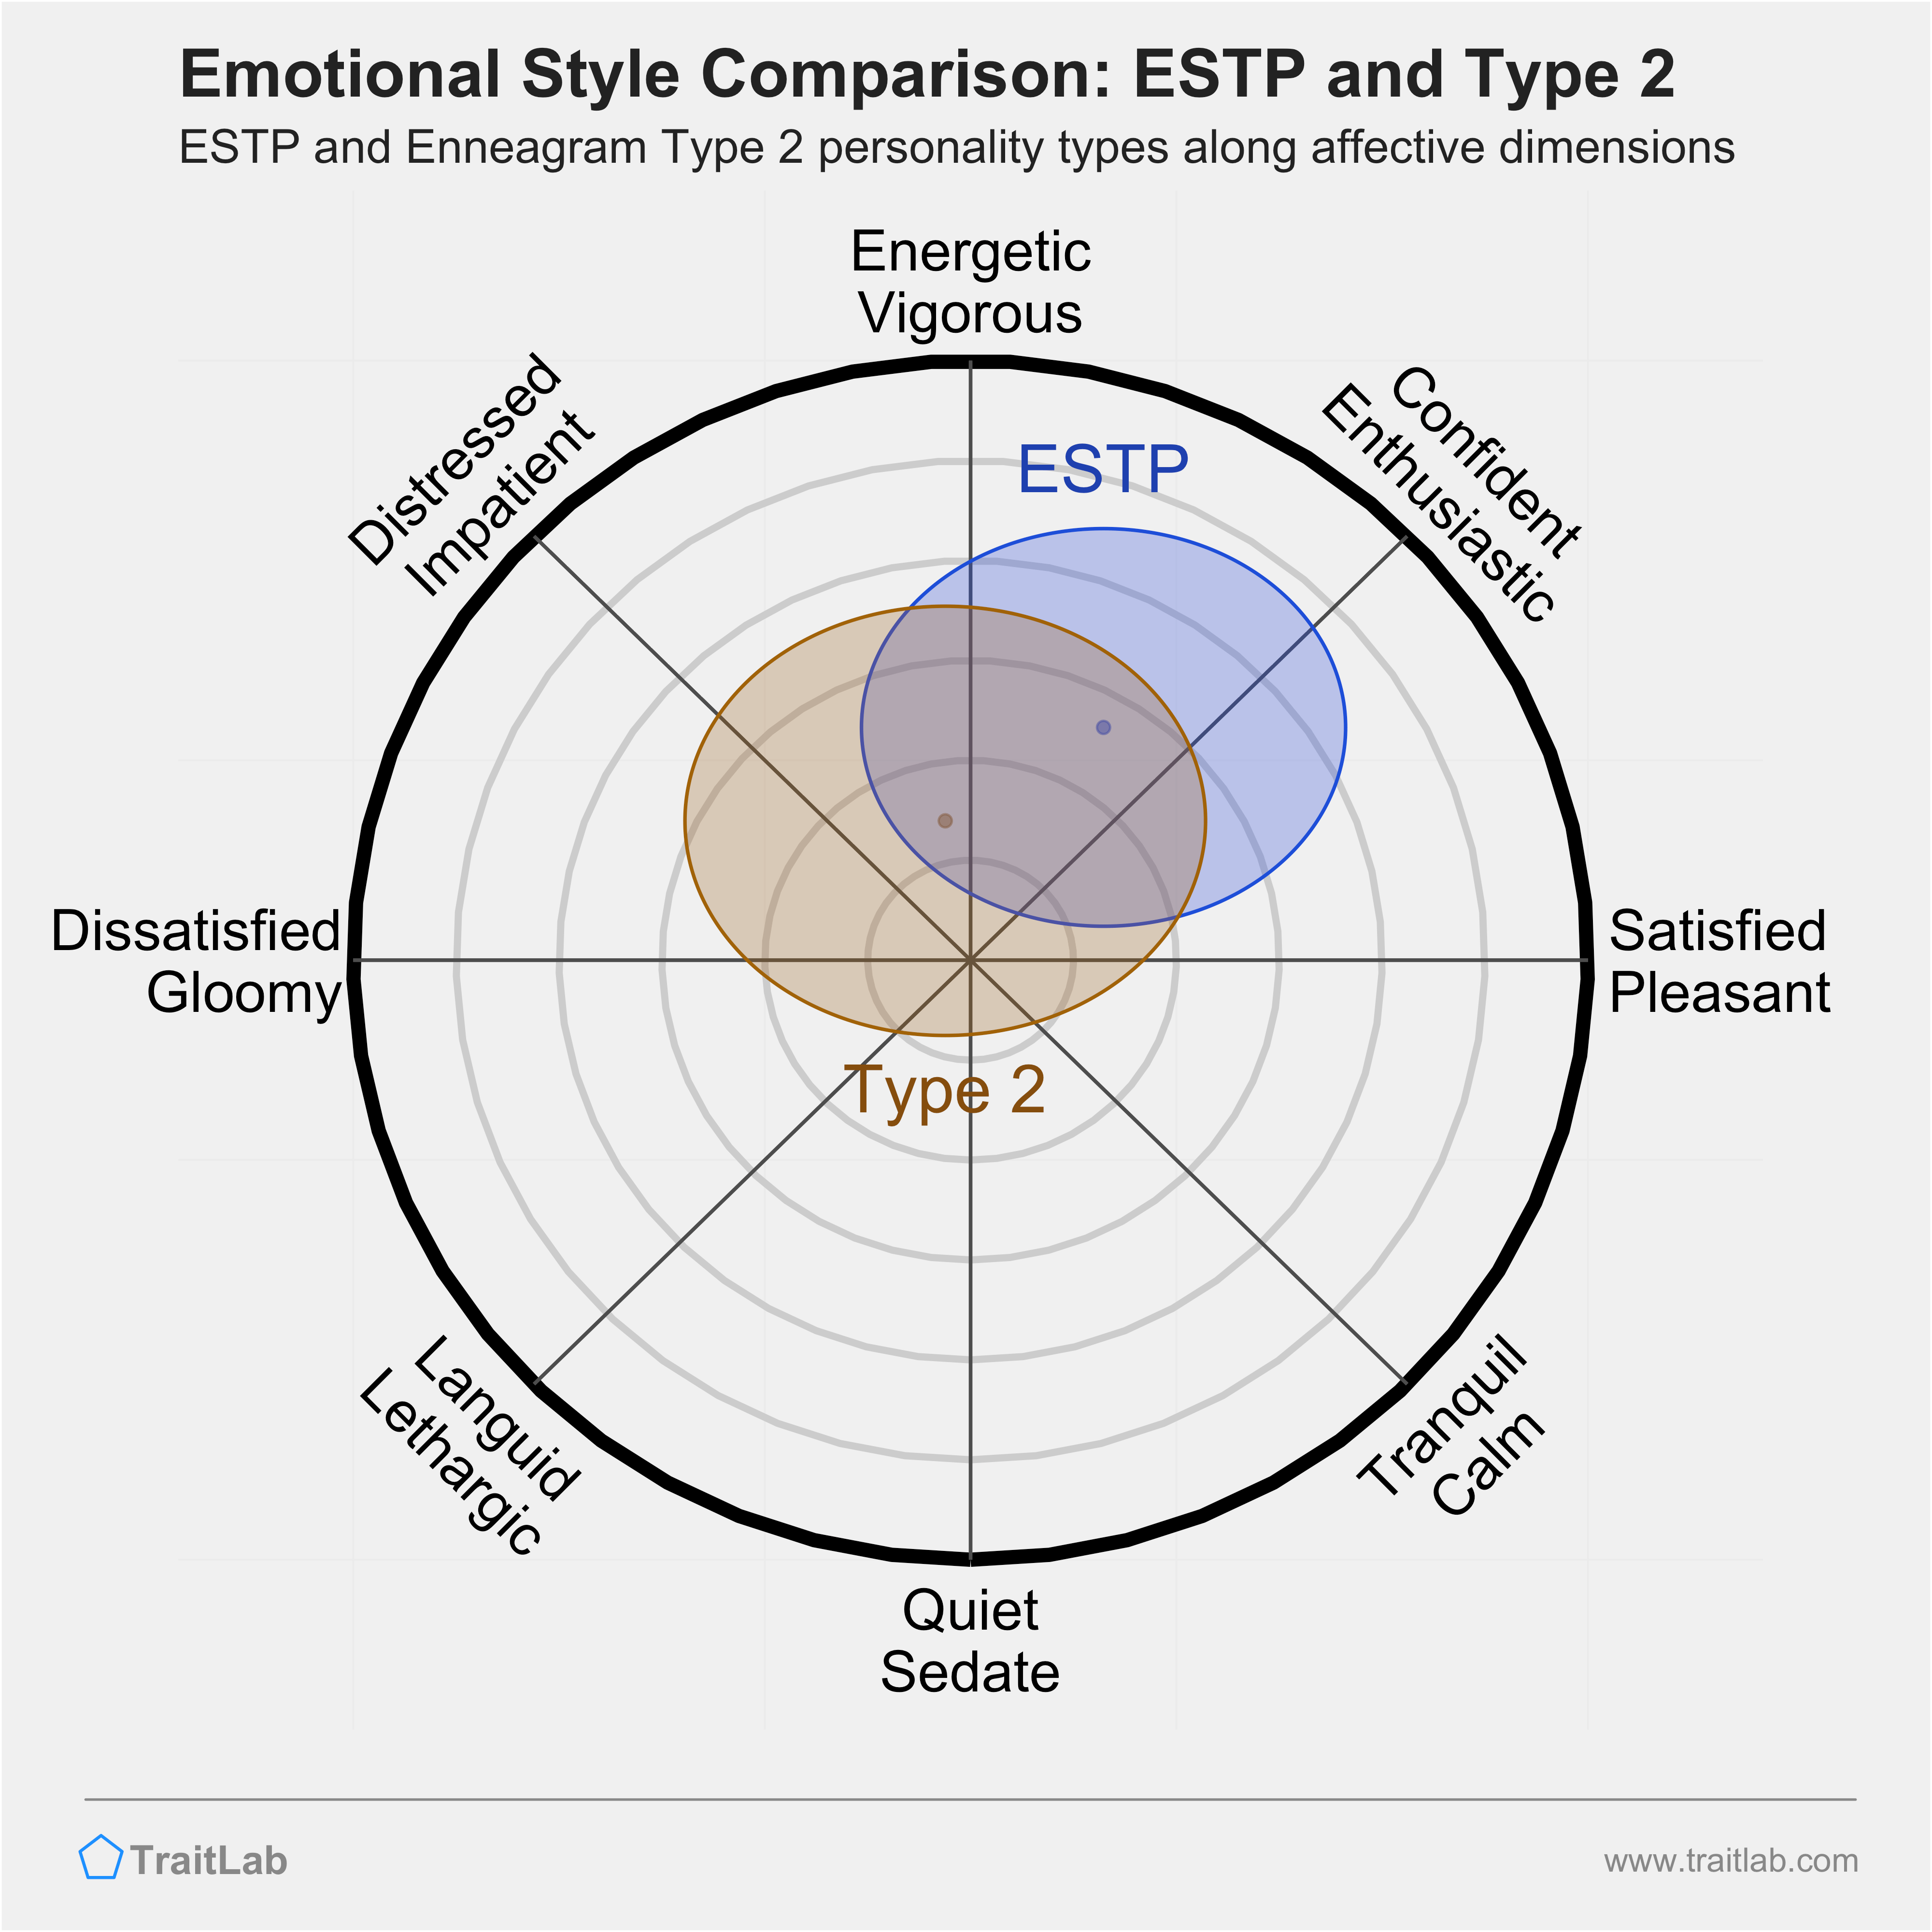 ESTP and Type 2 comparison across emotional (affective) dimensions